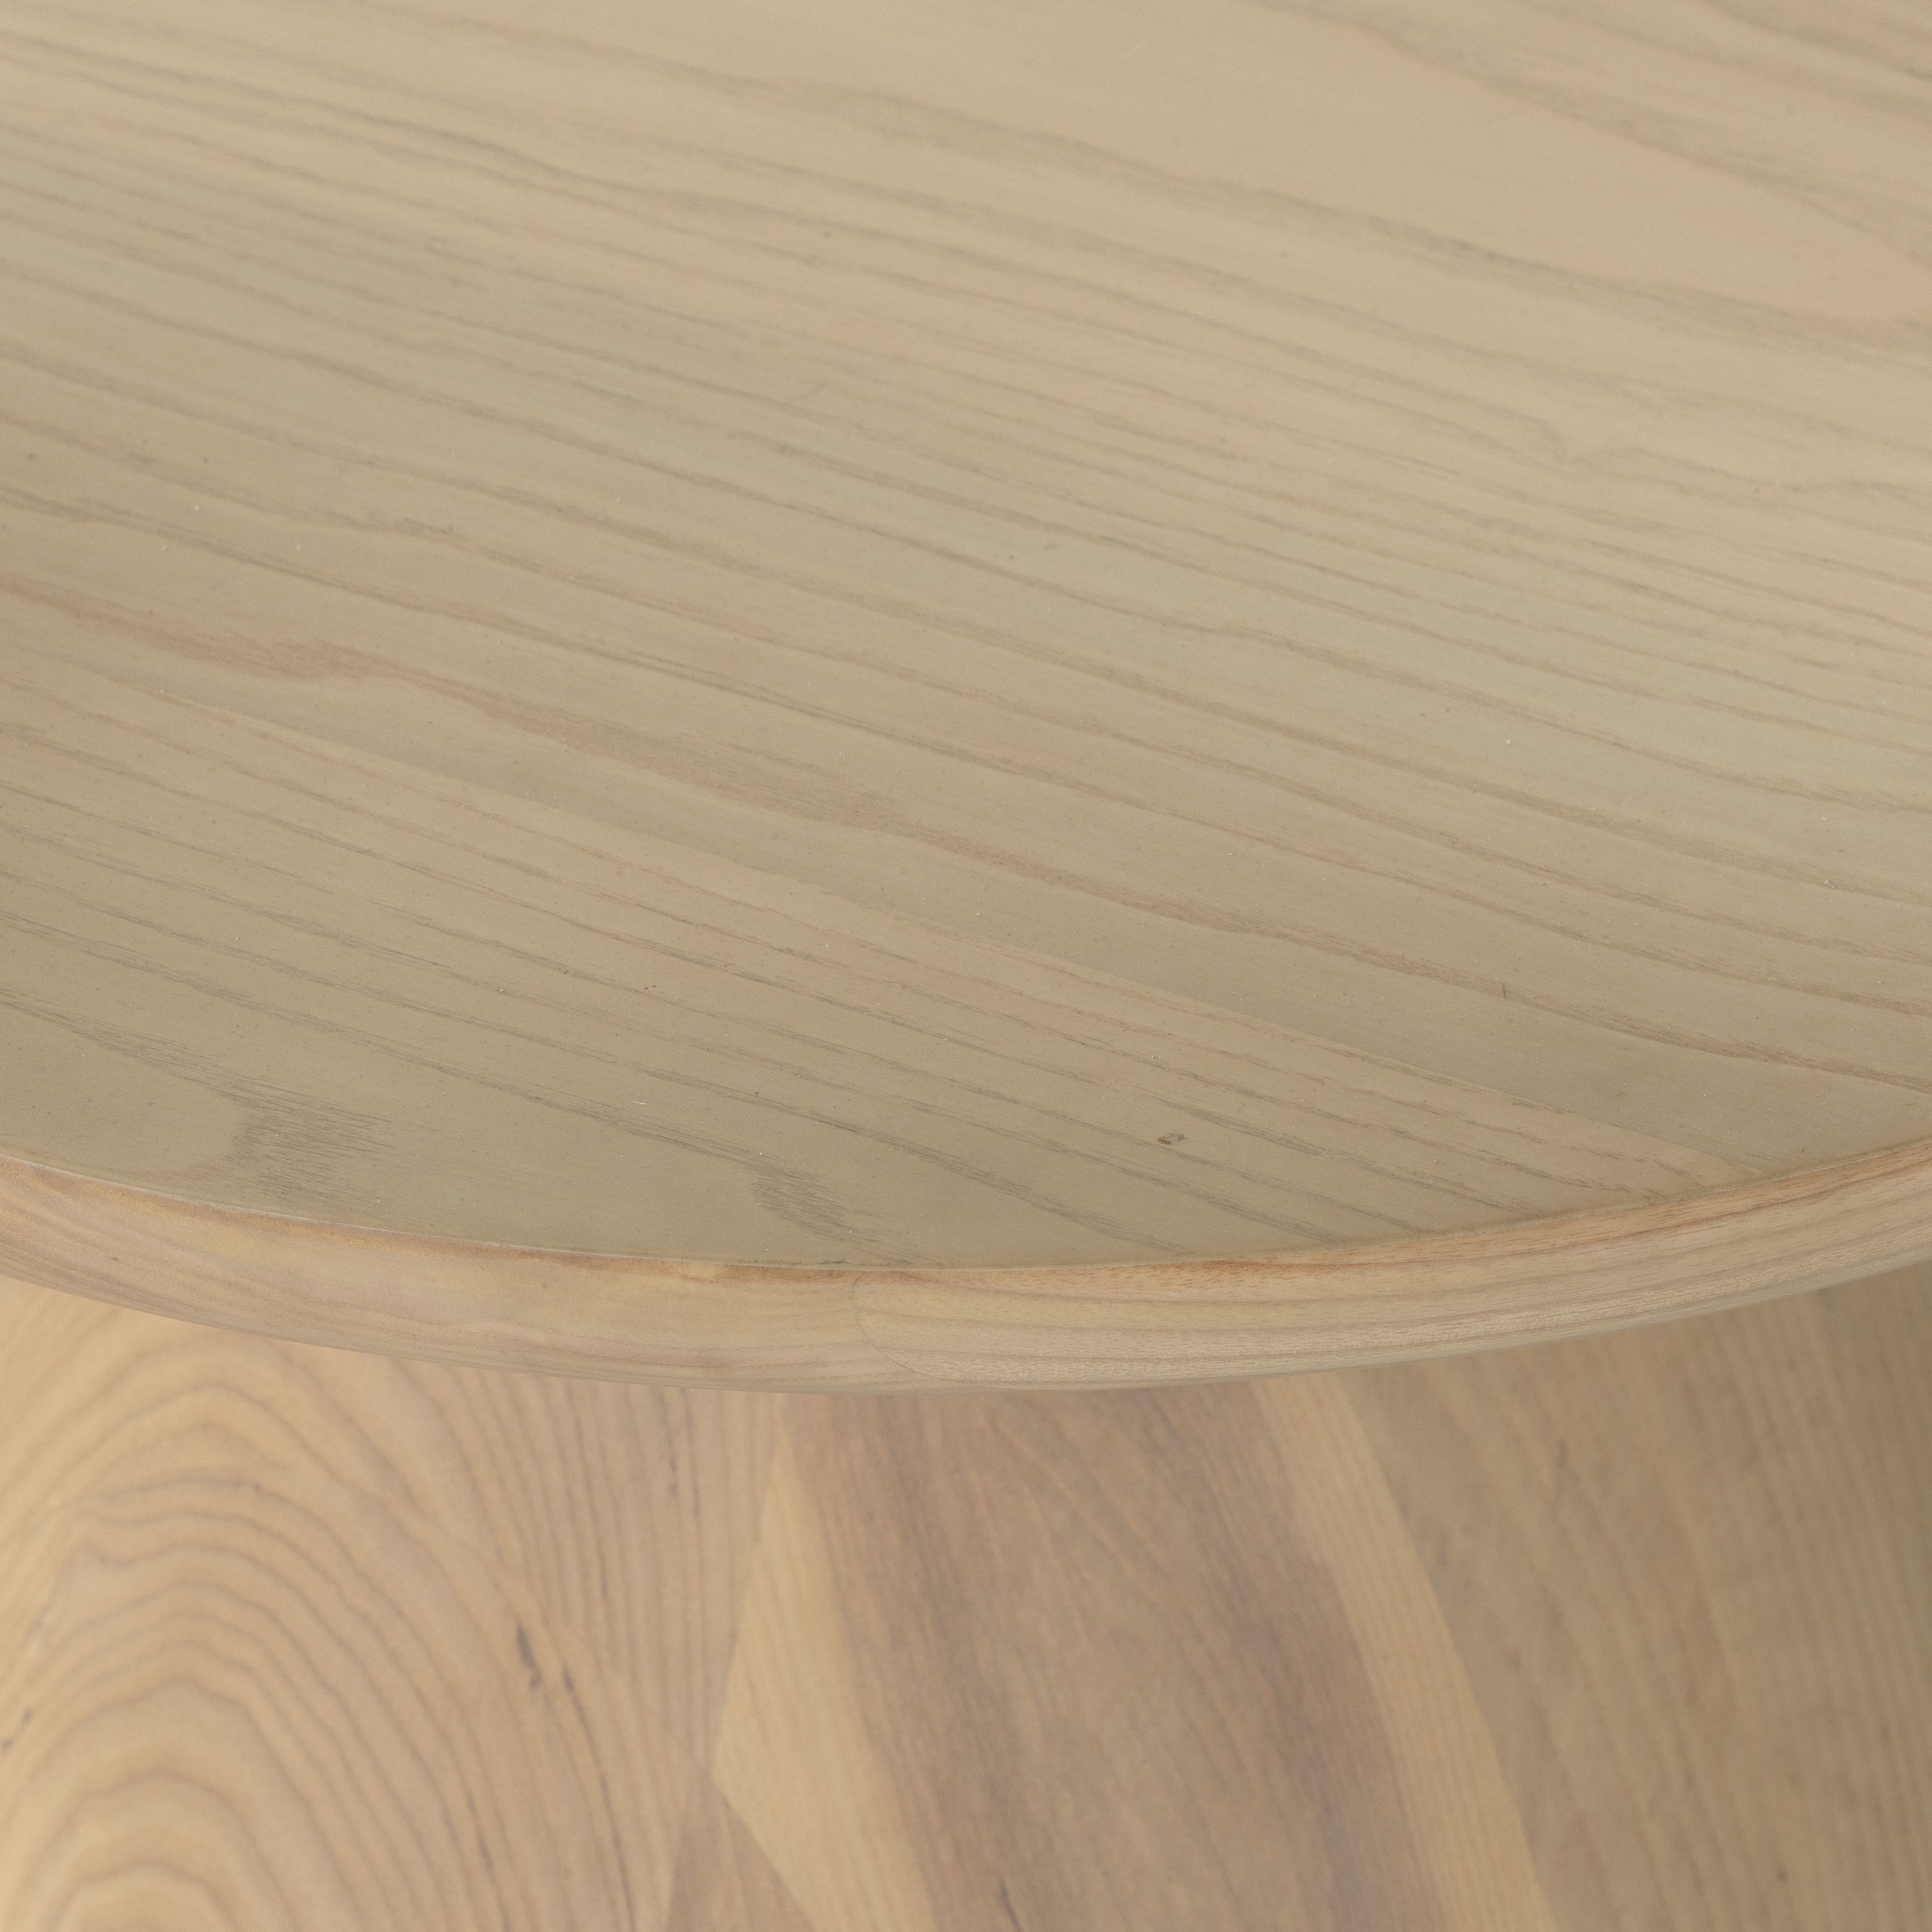 Merla Wood Coffee Table-Light Naturl Ash - StyleMeGHD - 